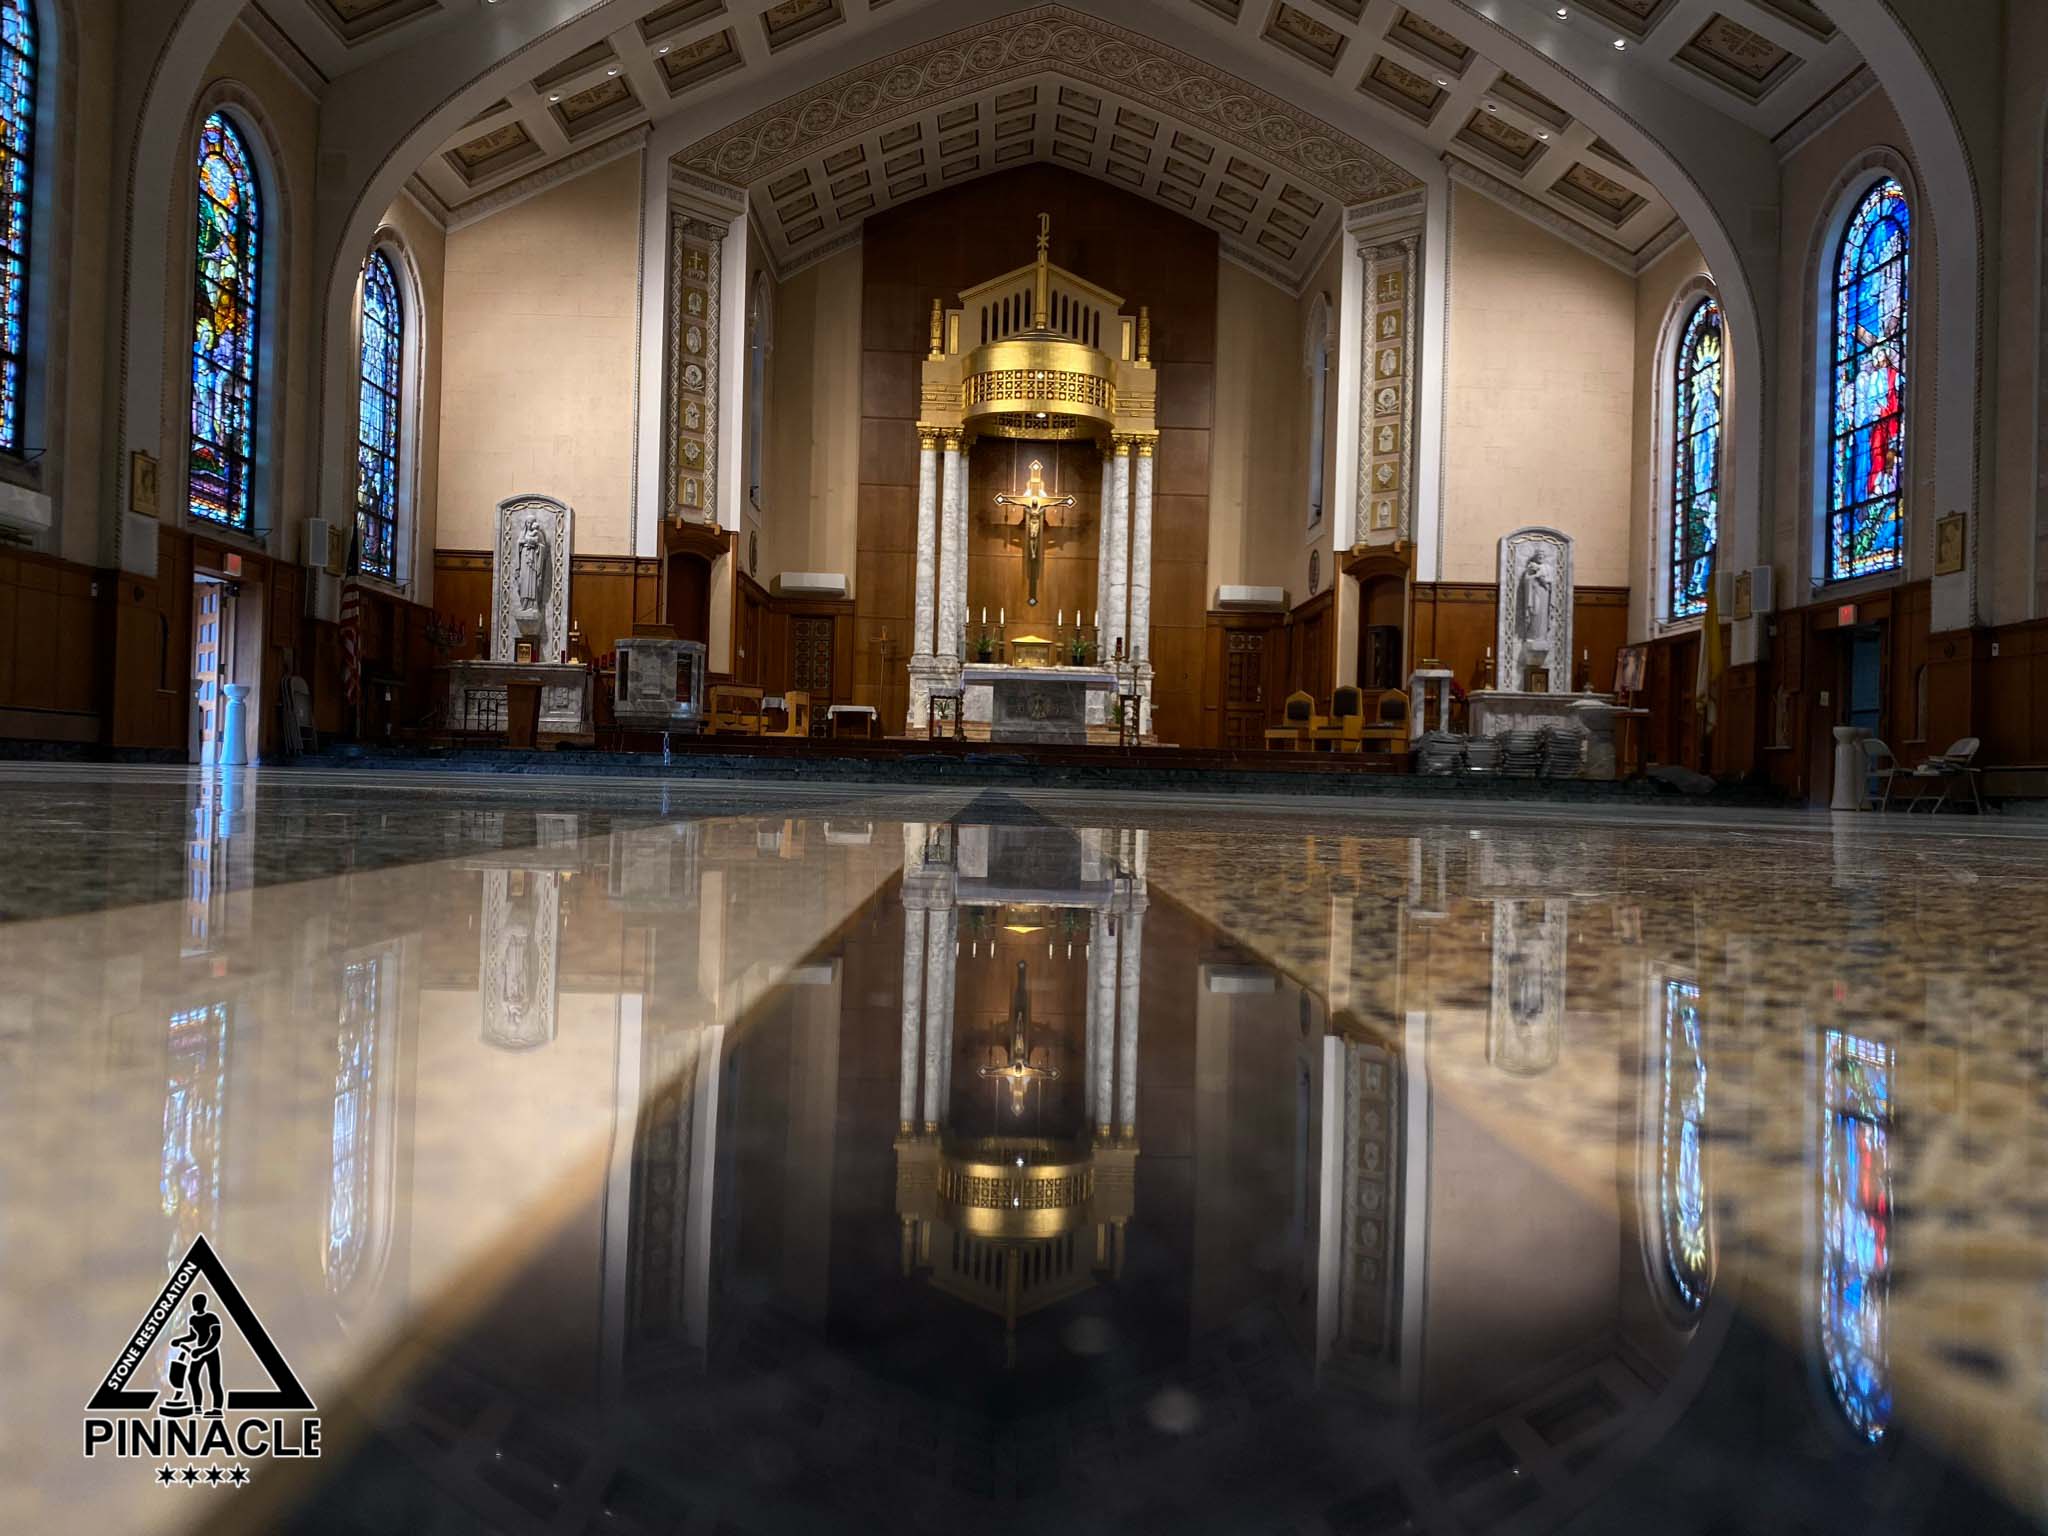 70-year-old terrazzo floor polishing and altar marble floor restoration and repair at Catholic Church in Chicago suburbs – honing, densifying, polishing, edges, vitrification, sealing, burnishing, repair.